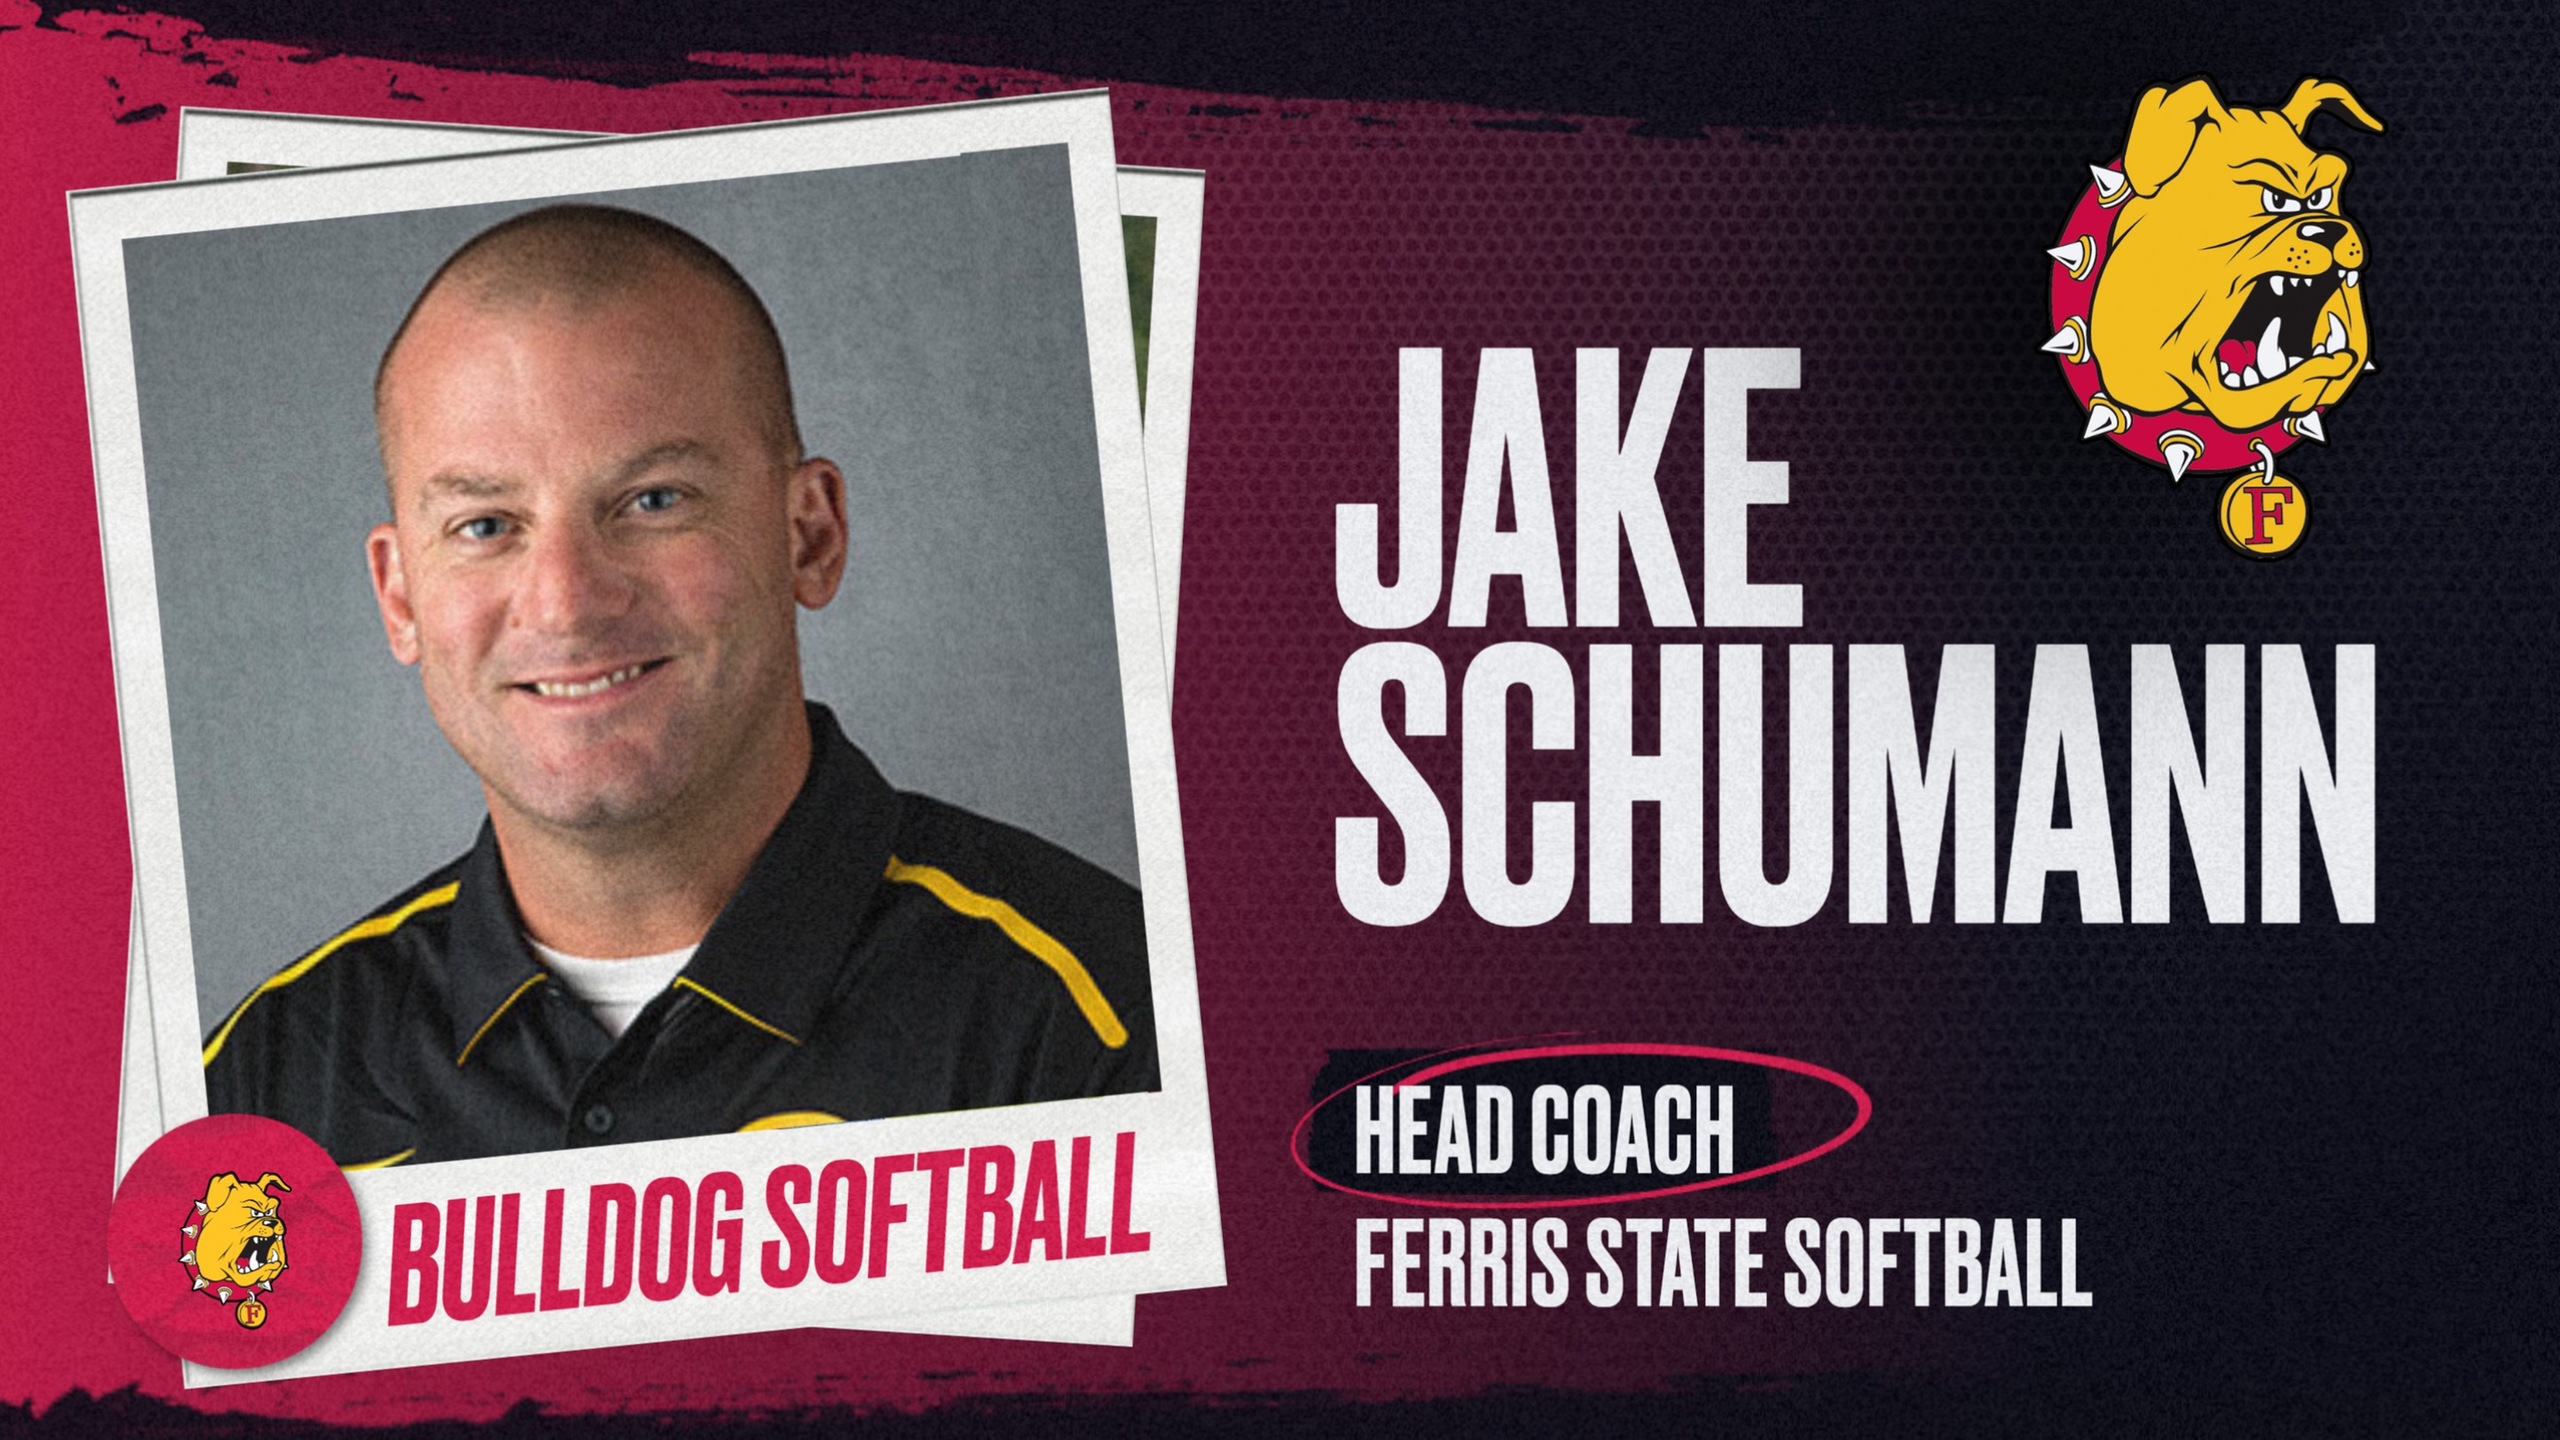 Ferris State Tabs Proven Softball Head Coach Jake Schumann To Take Over Bulldog Program